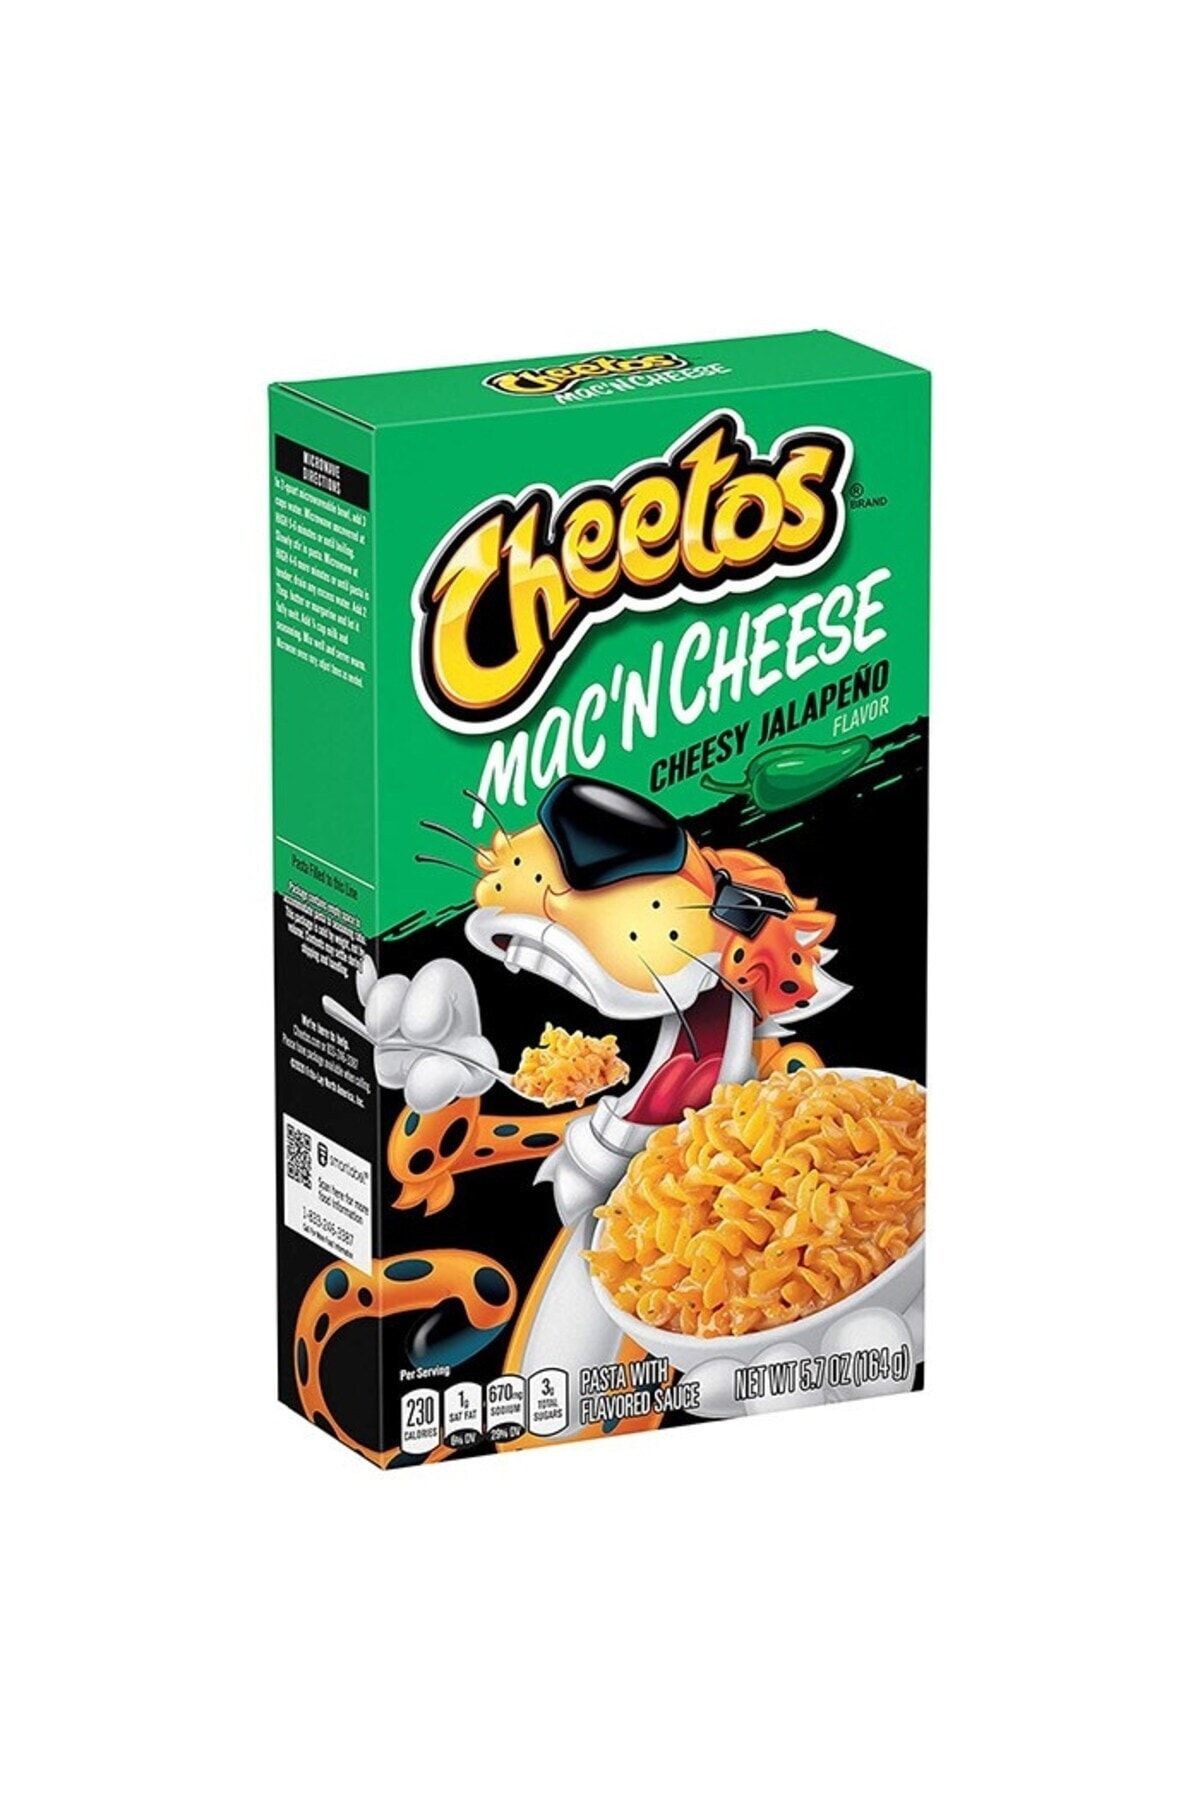 Cheetos MAC AND CHEESE CHEESY JALAPEÑO 164G